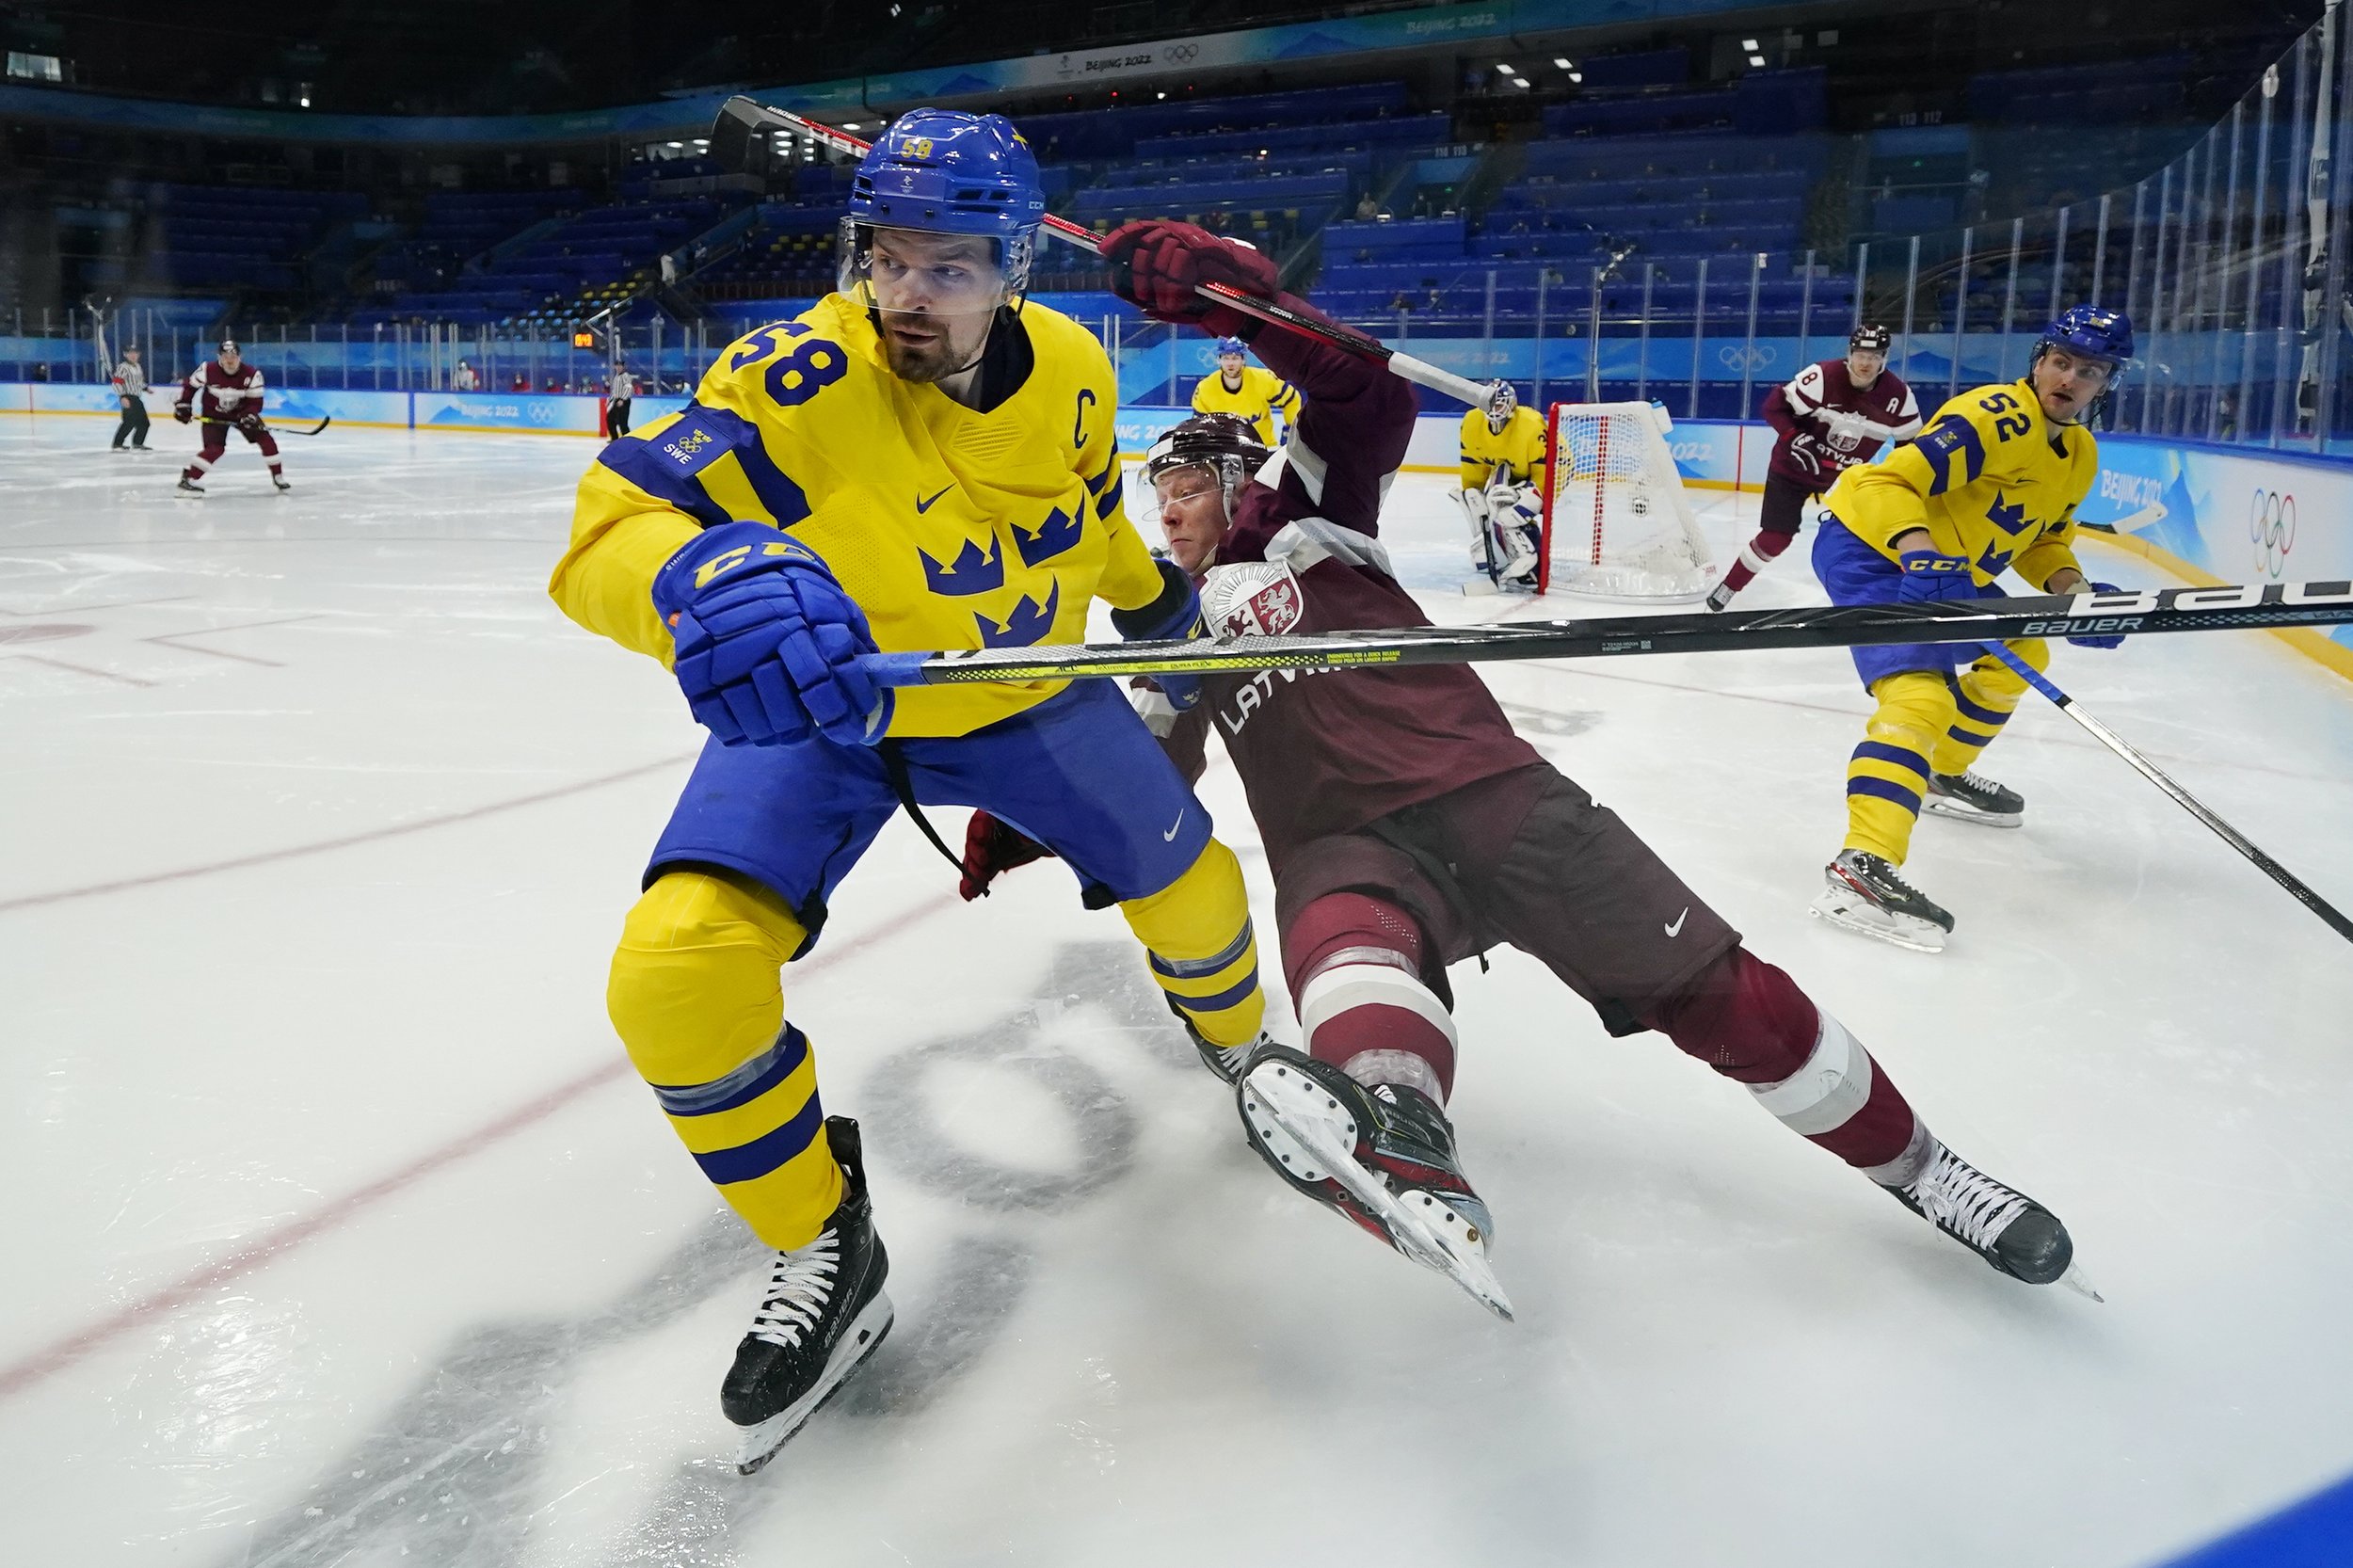  Sweden's Anton Lander (58) and Latvia's Ronalds Kenins (91) battle in the corner during a preliminary round men's hockey game at the 2022 Winter Olympics, Thursday, Feb. 10, 2022, in Beijing. (AP Photo/Matt Slocum) 